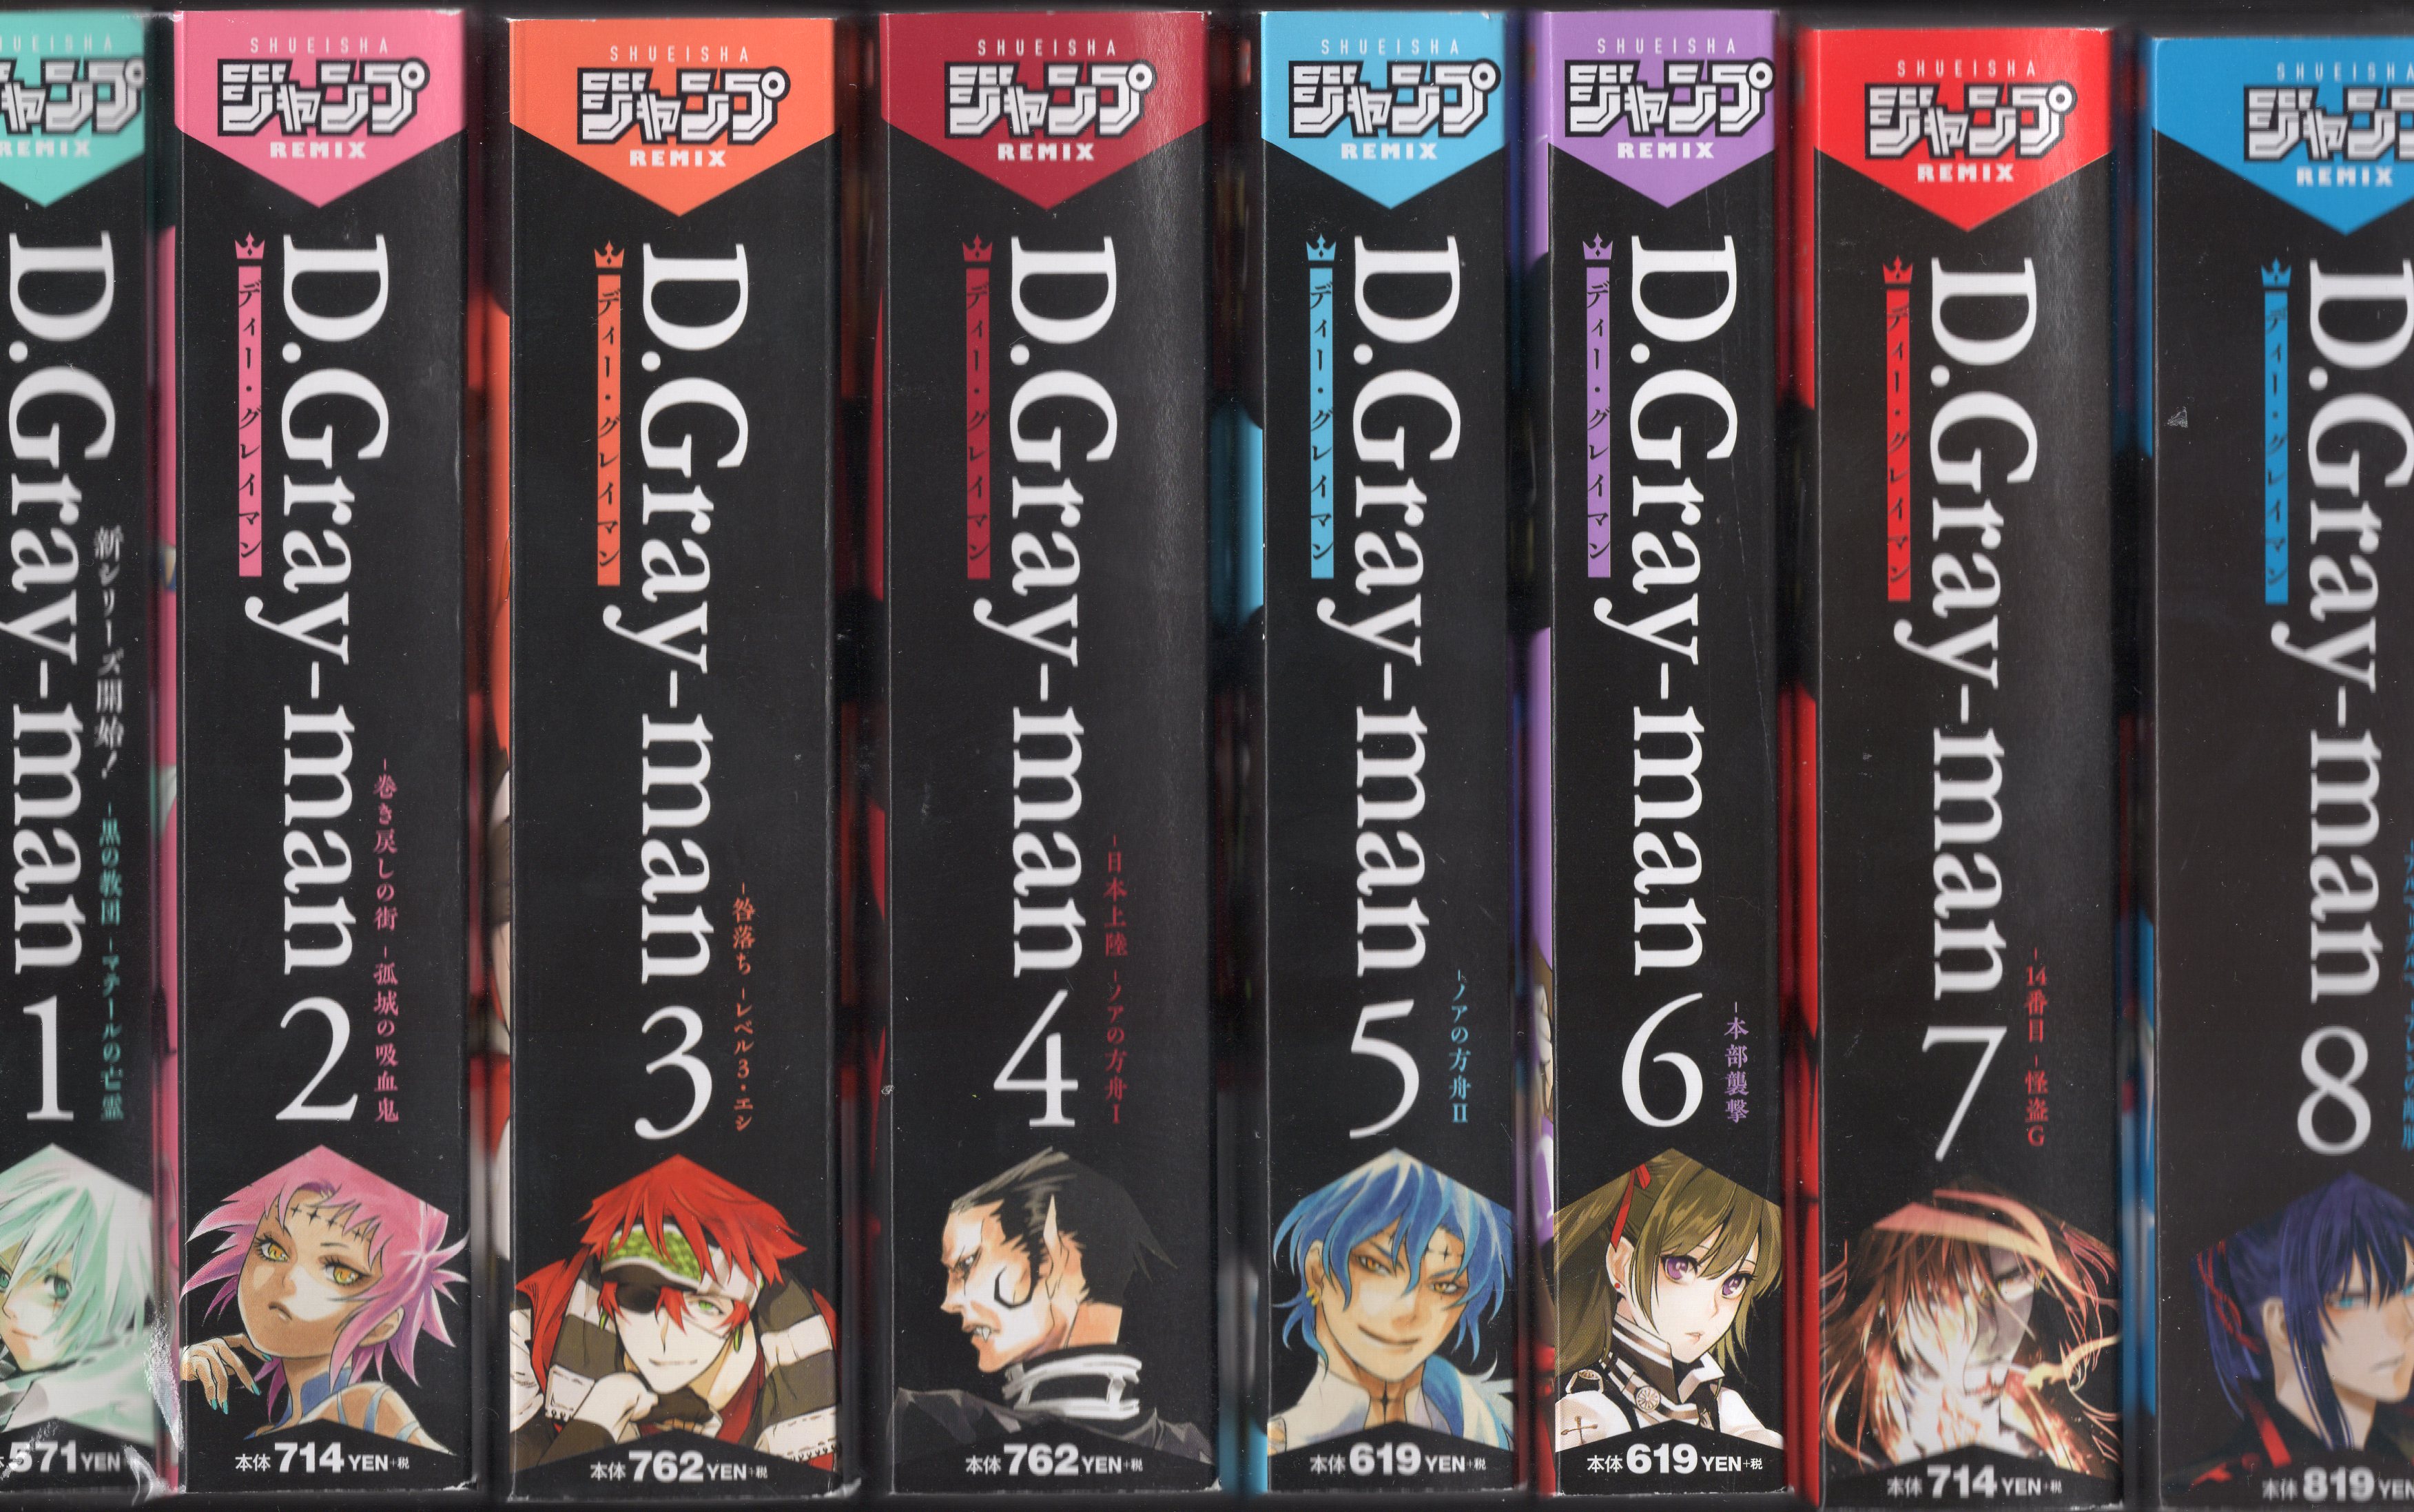 D.Gray-man DVD 一期全巻 設定画集付き - ブルーレイ